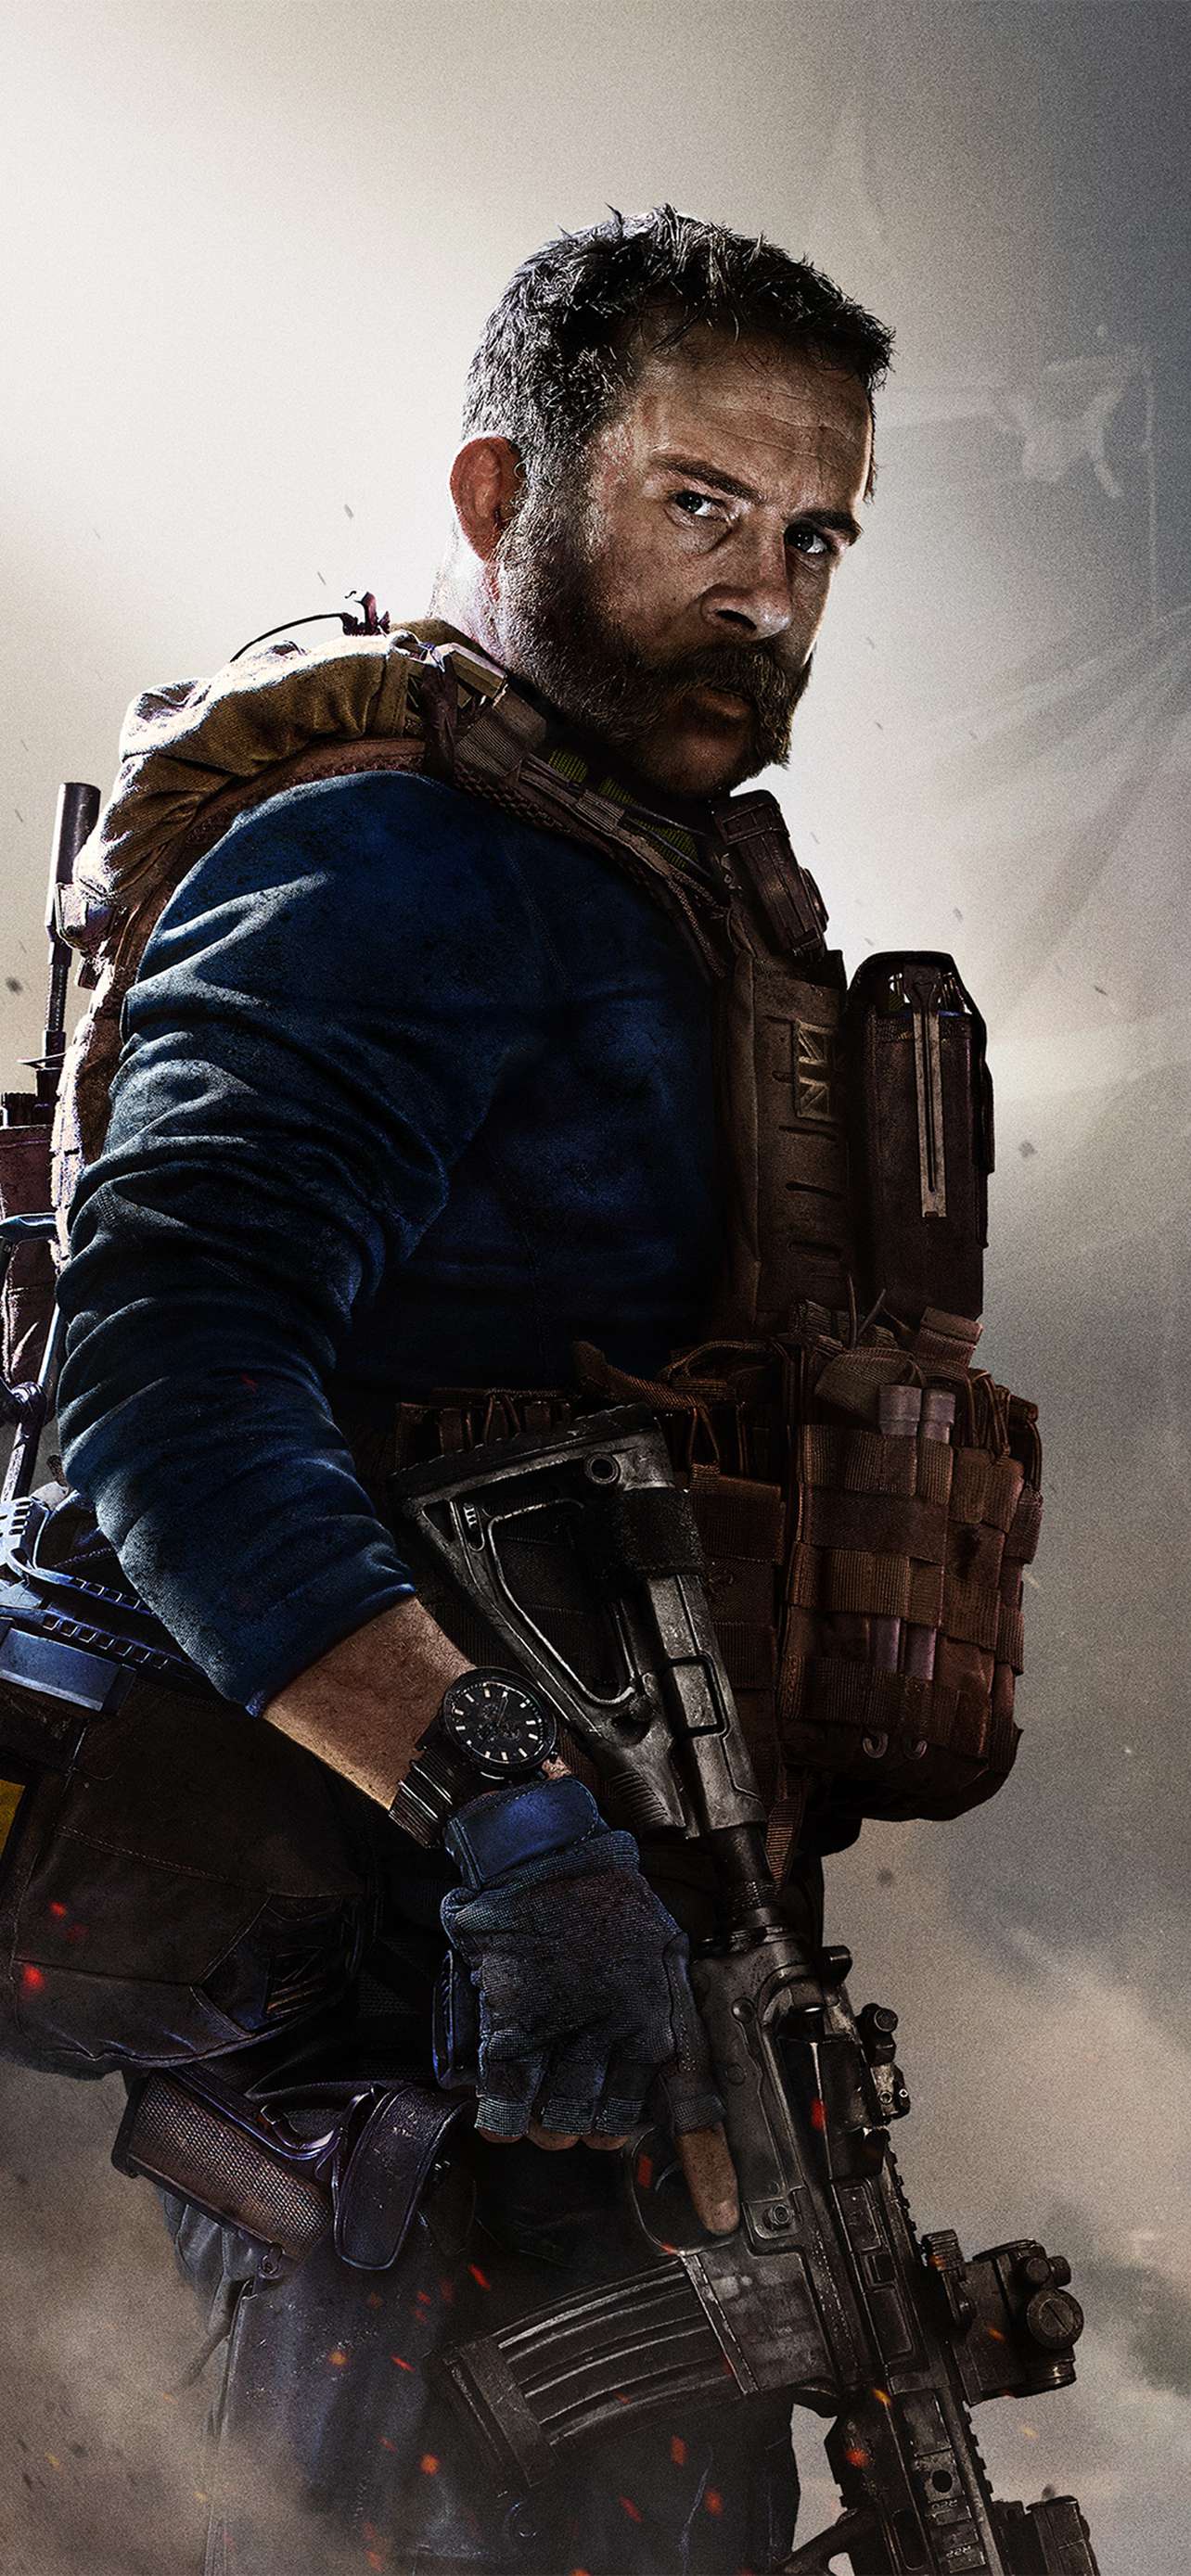 Call Of Duty: Modern Warfare Wallpaper for iPhone